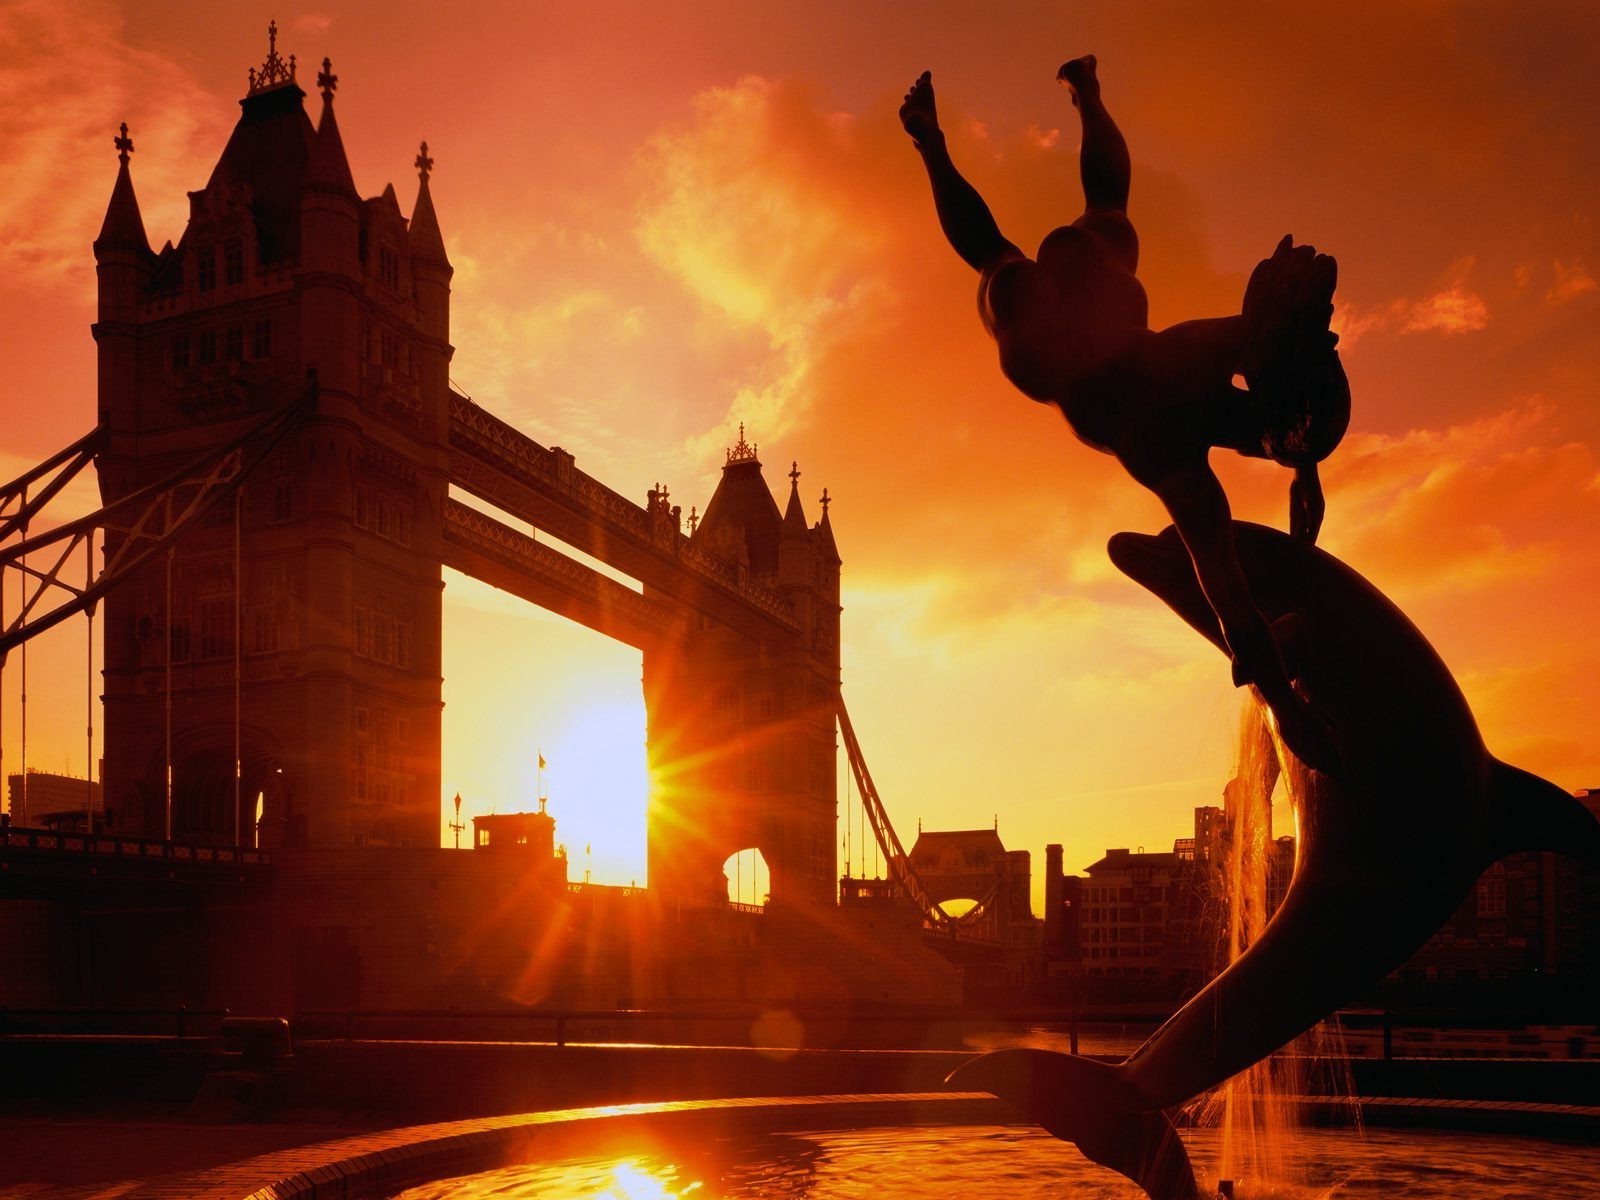 Sun, Landscape, Building, City, Dolphin, River Thames, London Bridge, England, Statue, Sunset, Sunlight, Bridge, Silhouette, UK, London Wallpaper